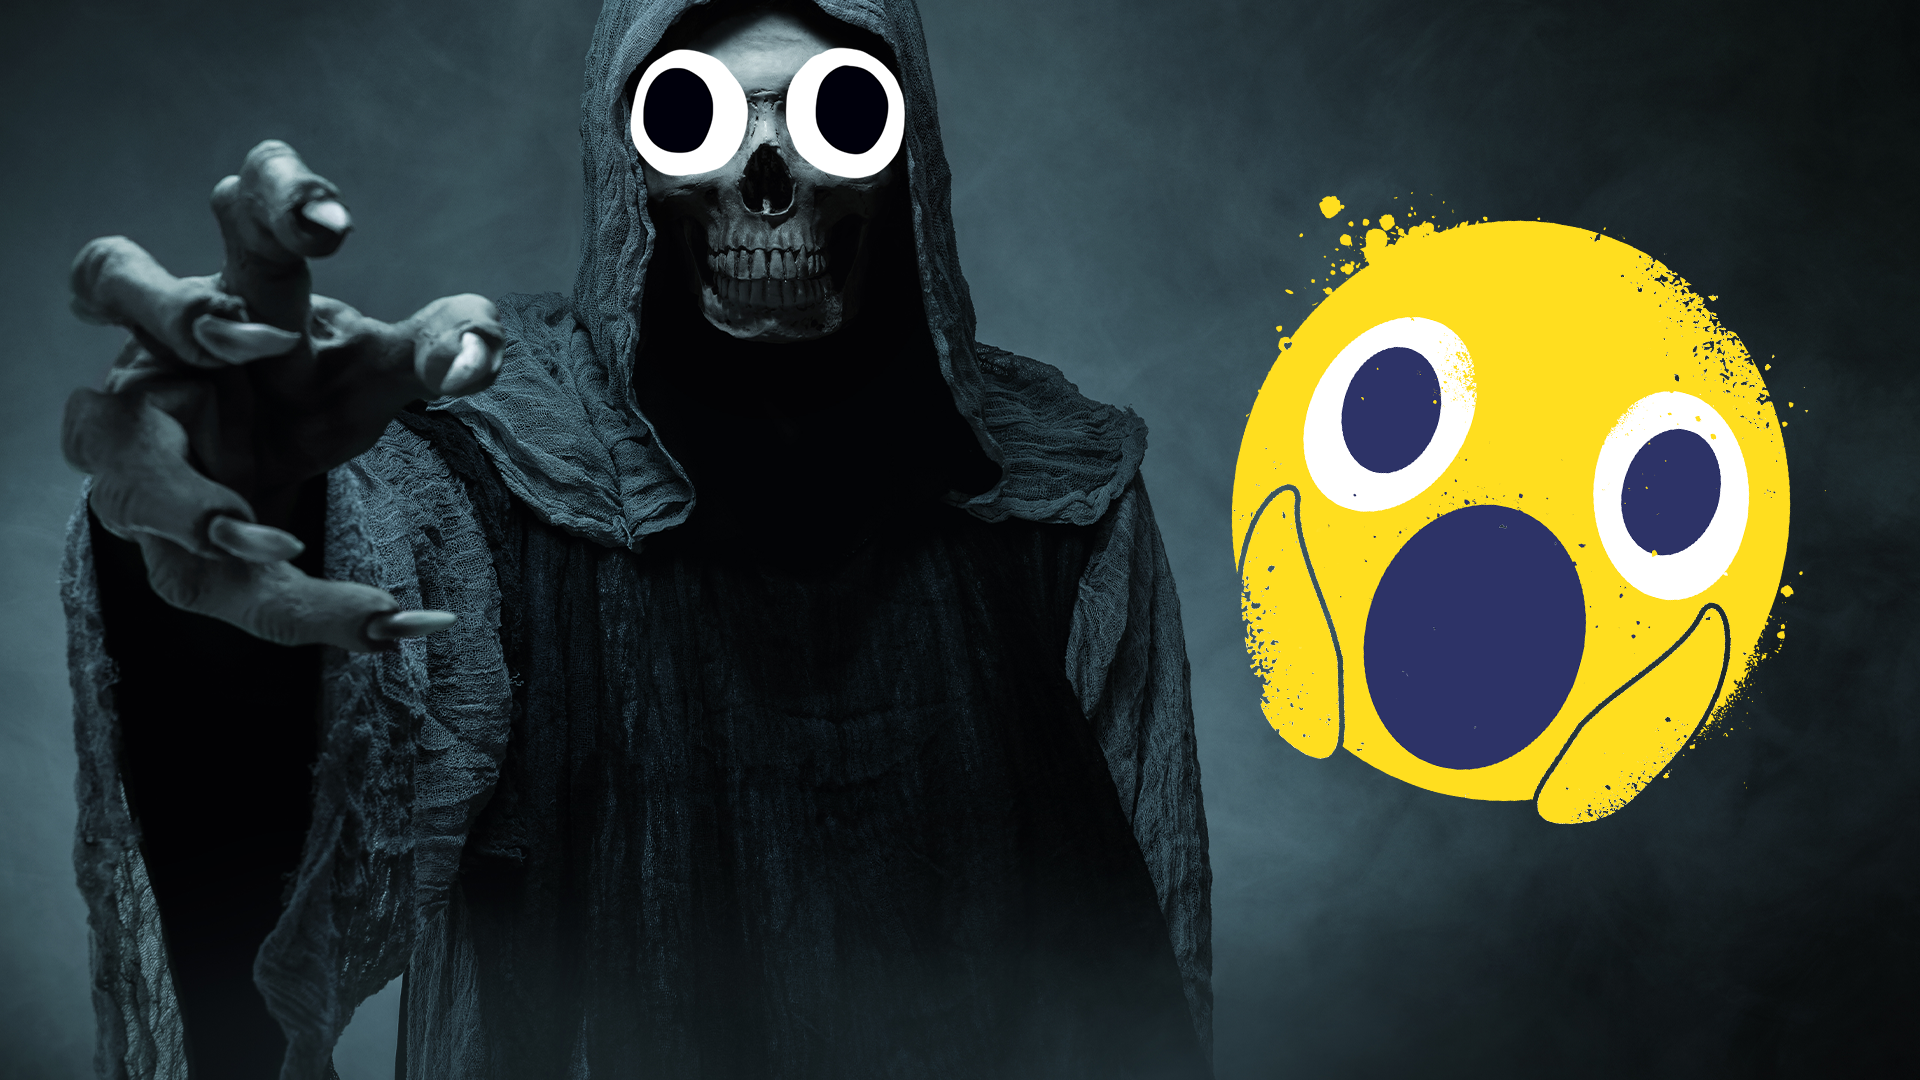 A creepy grim reaper and a shocked emoji